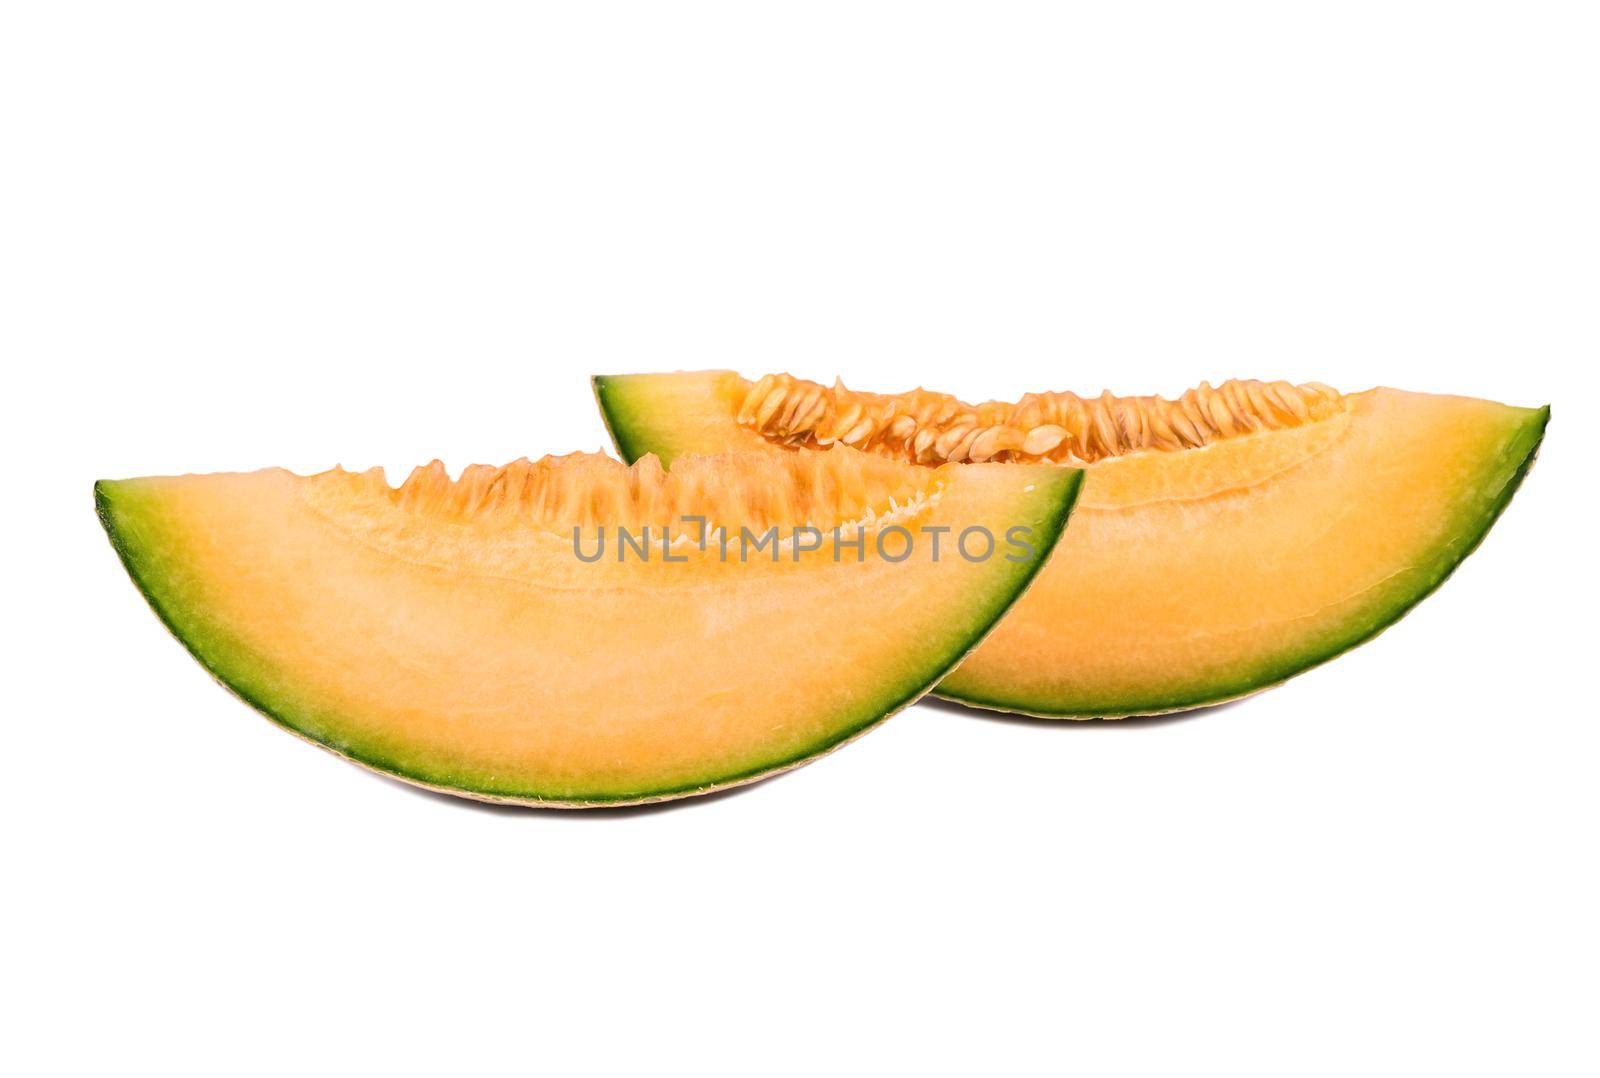 Two slices of fresh cantaloupe melon isolated on white background